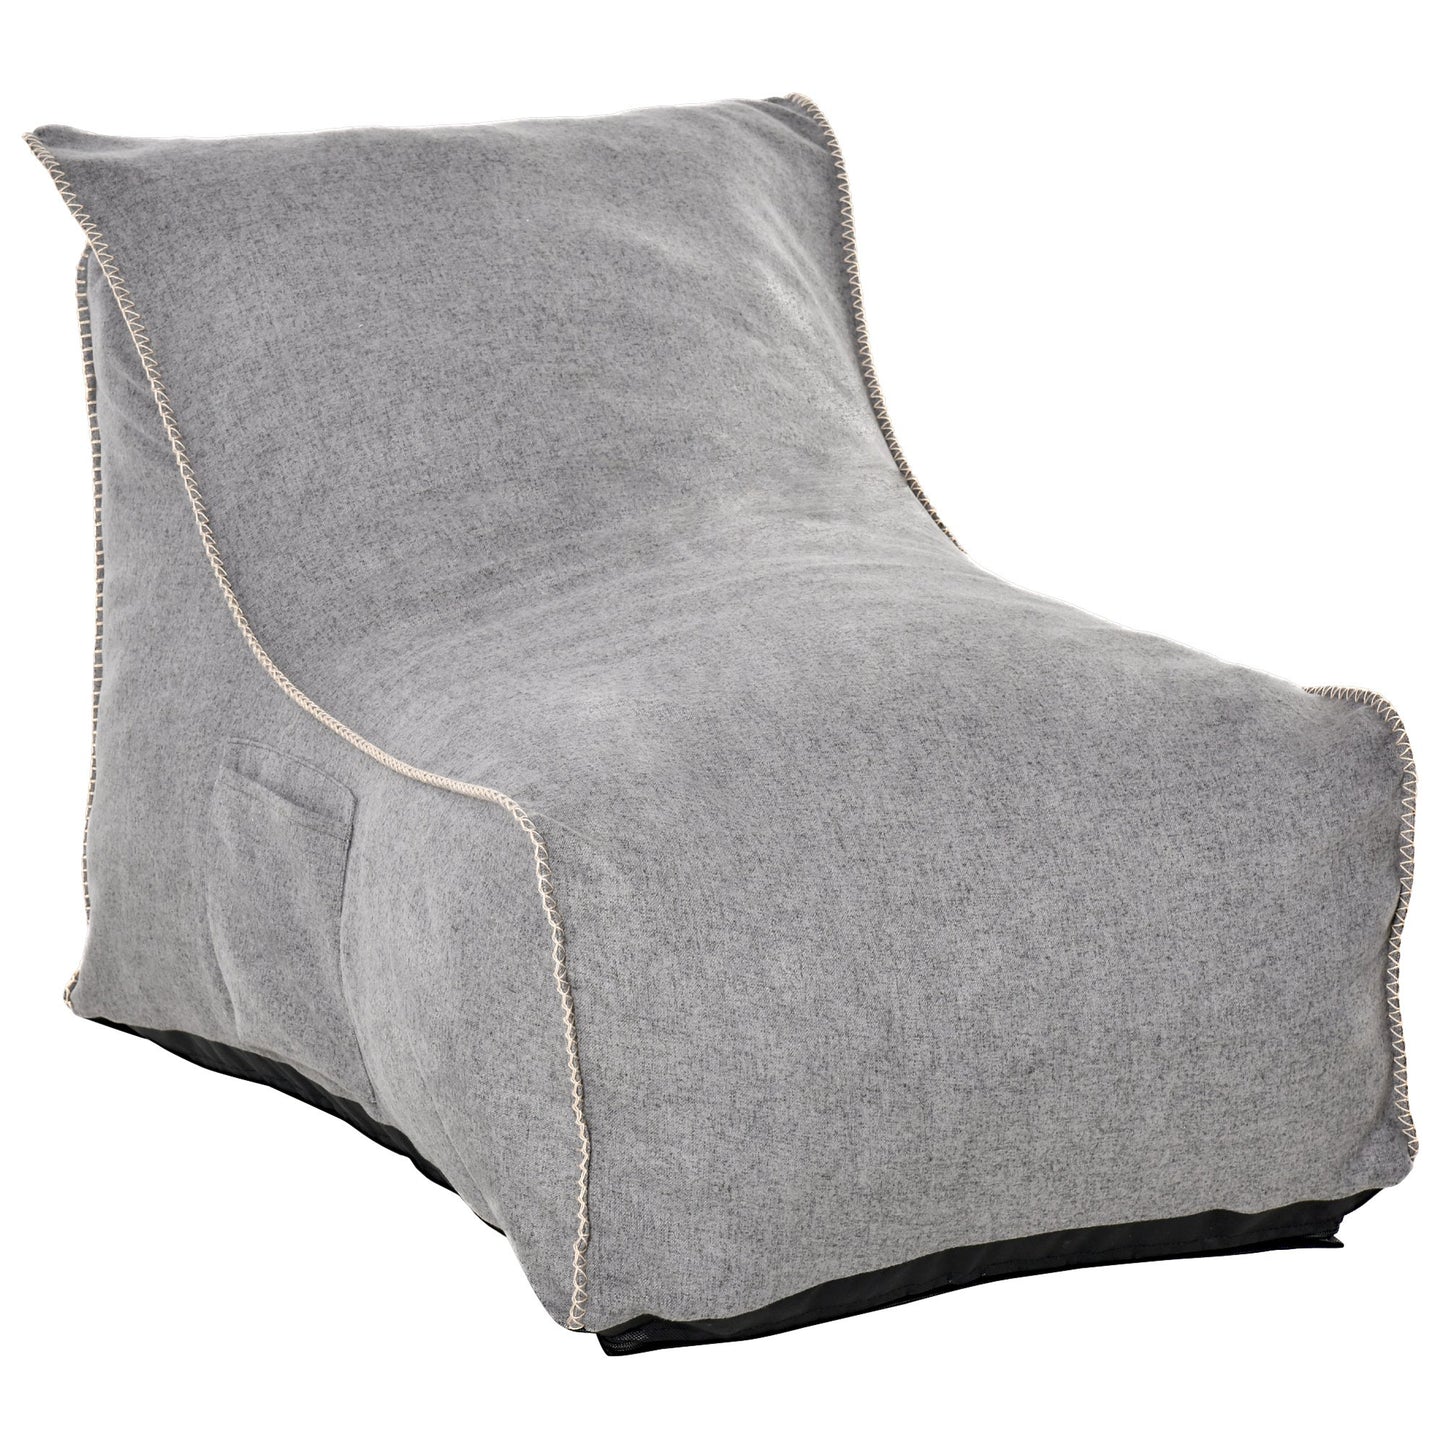 HOMCOM Bean Bag Chair Large Foam Stuffed lounger Washable Cover Side Pocket Dark Grey